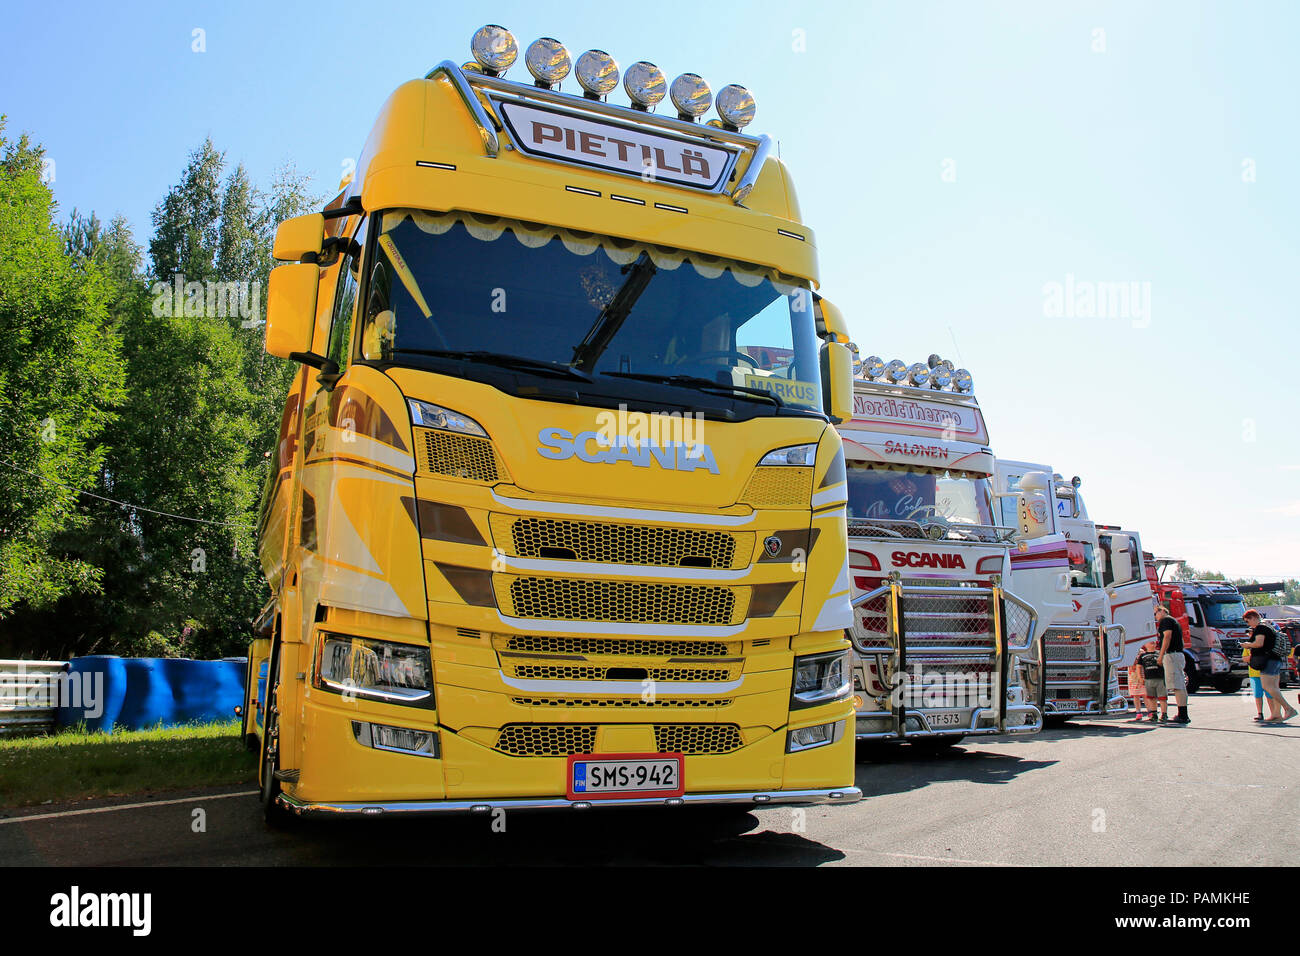 Yellow Next Generation Scania truck of Kuljetusliike Pietila Oy on Tawastia Truck Weekend 2018, public event. Hameenlinna, Finland - July 14, 2018. Stock Photo